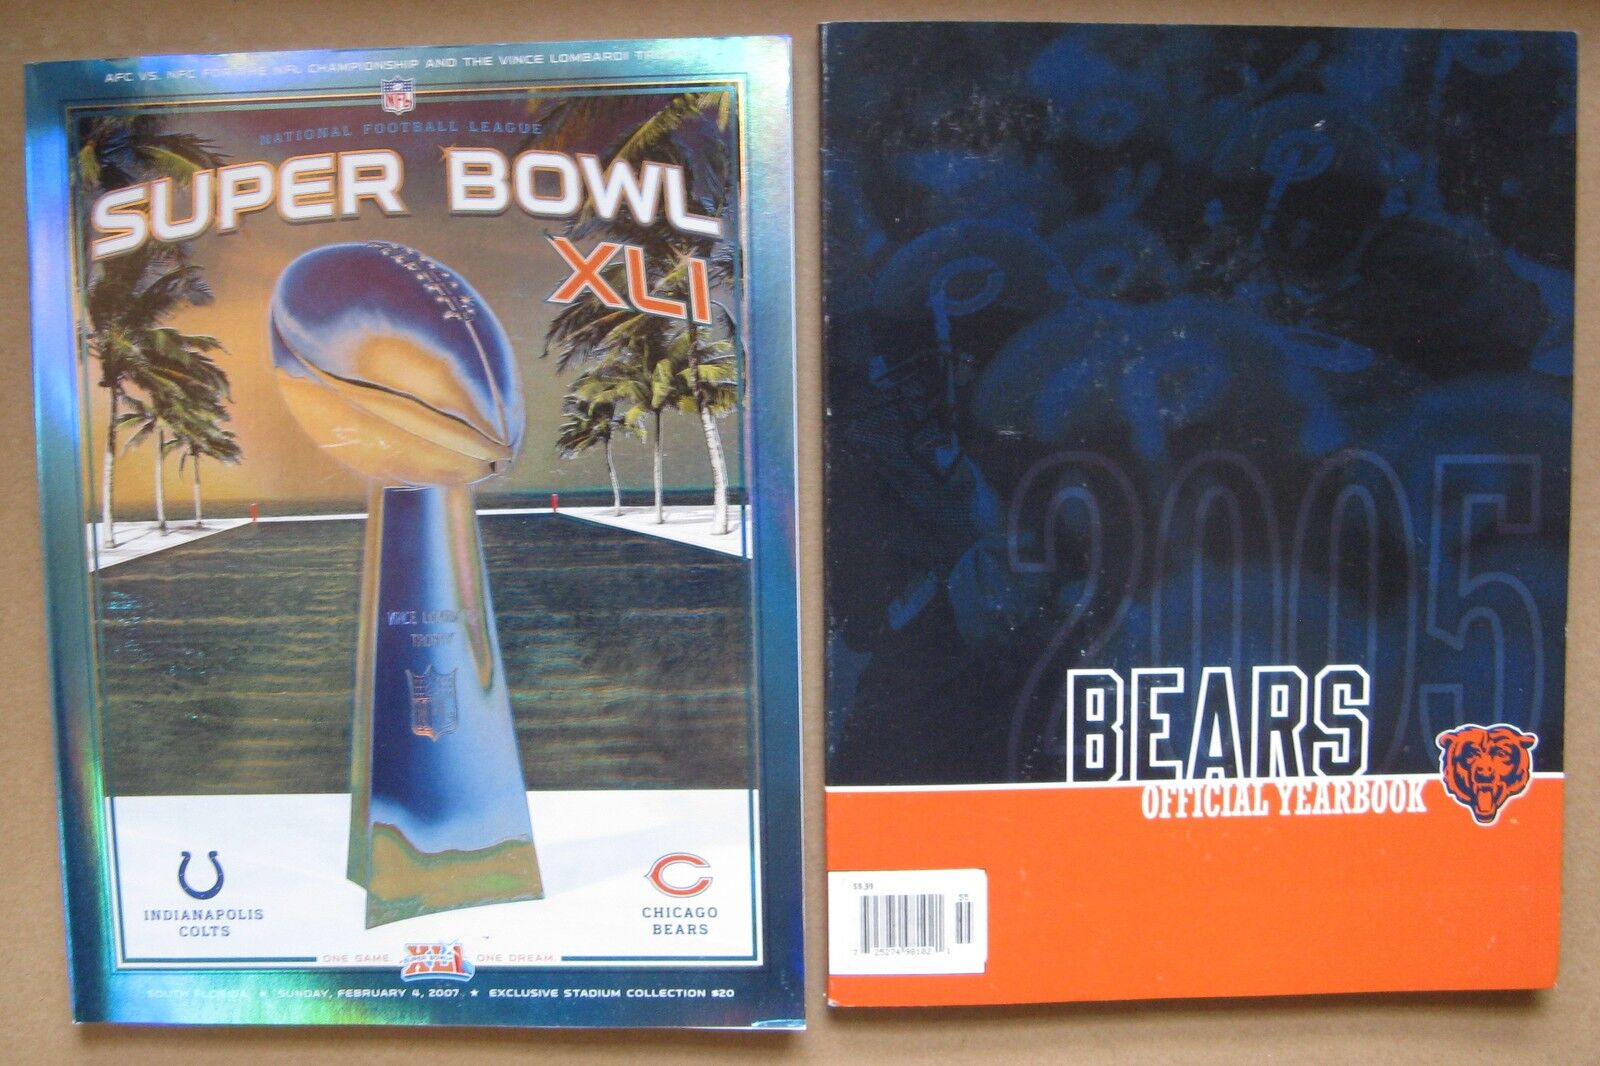 2005 Chicago Bears Yearbook + 2007 Super Bowl XLI Program (Colts-Bears)